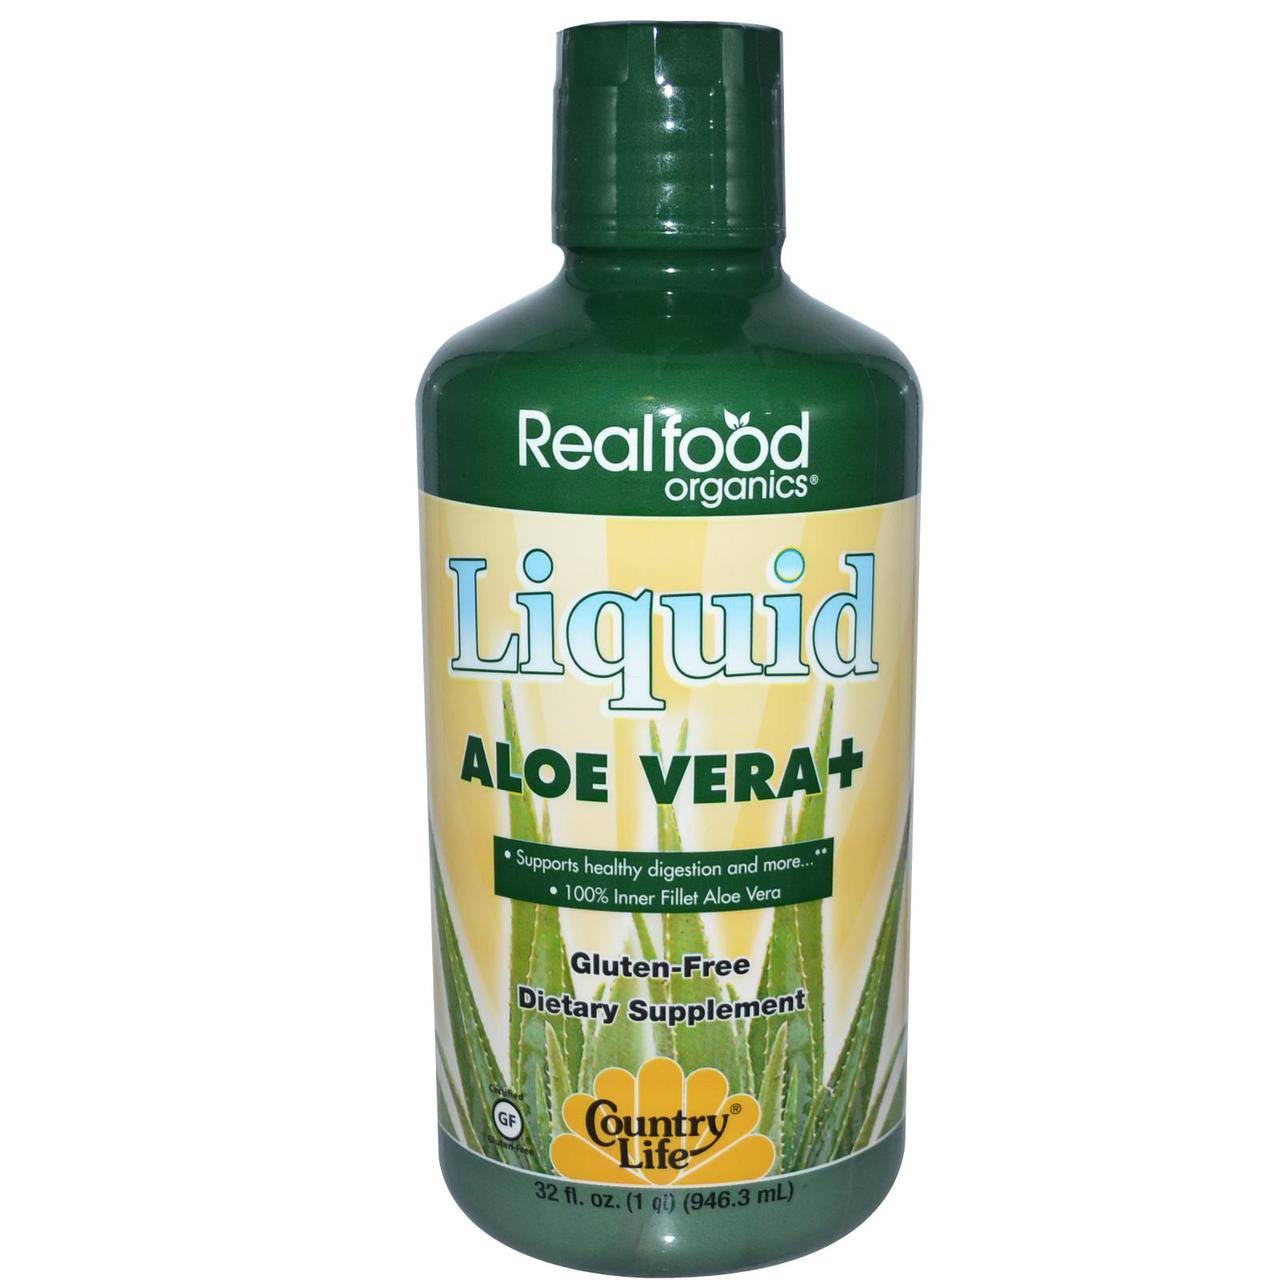 Country Life Organic Liquid Aloe Vera Plus - 32 Oz